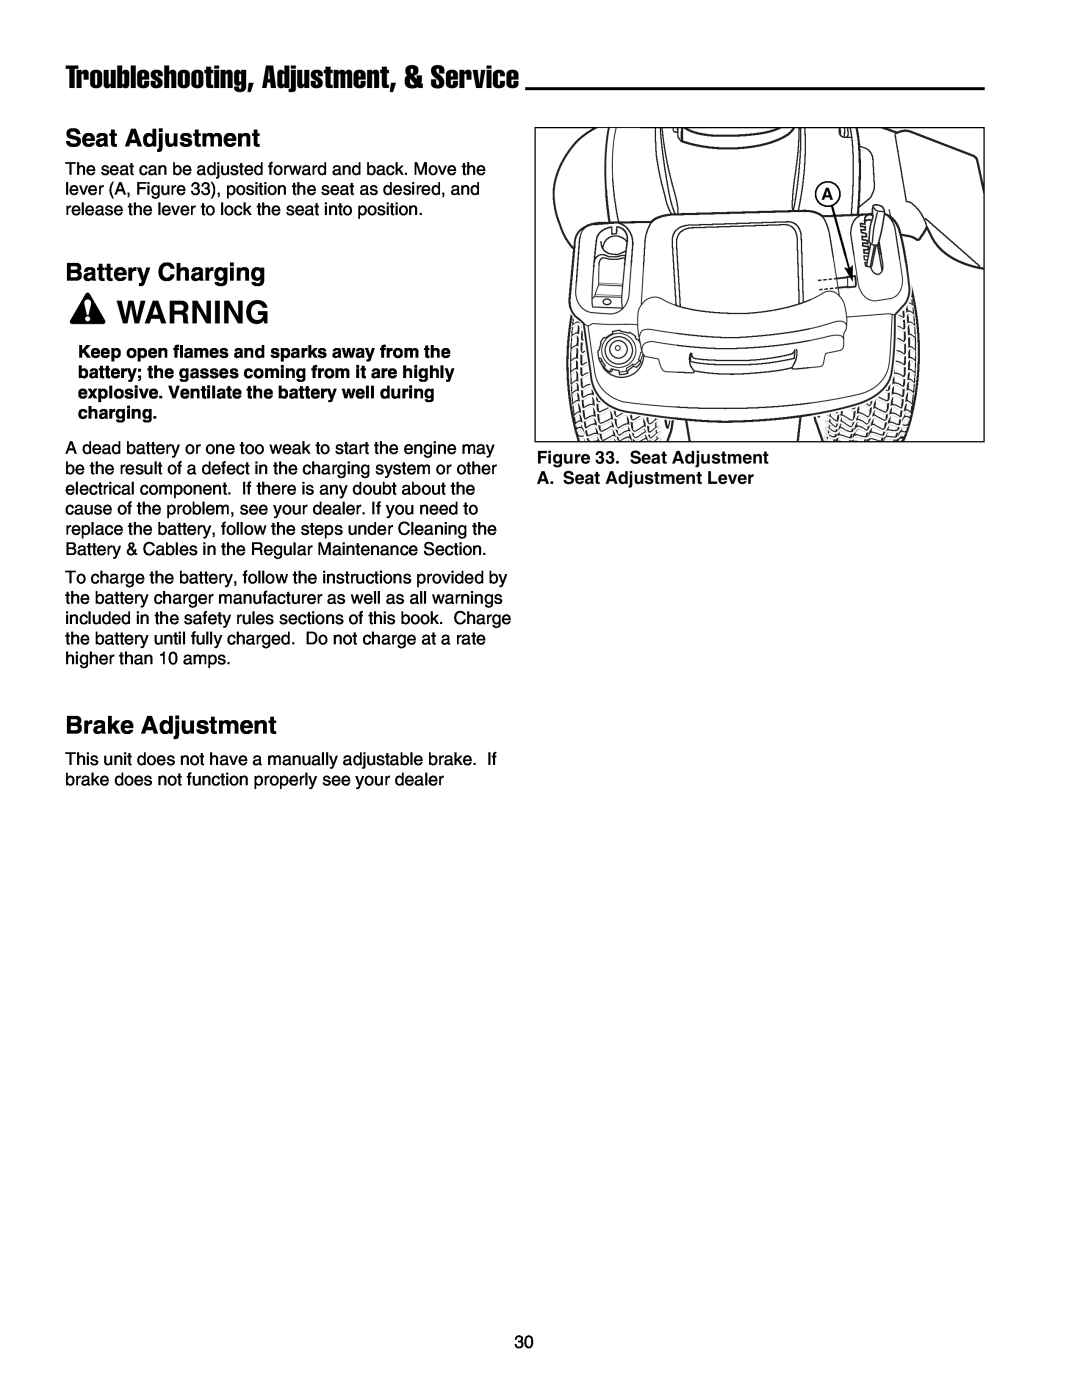 Snapper LT-200 Series manual Troubleshooting, Adjustment, & Service, Seat Adjustment, Battery Charging, Brake Adjustment 